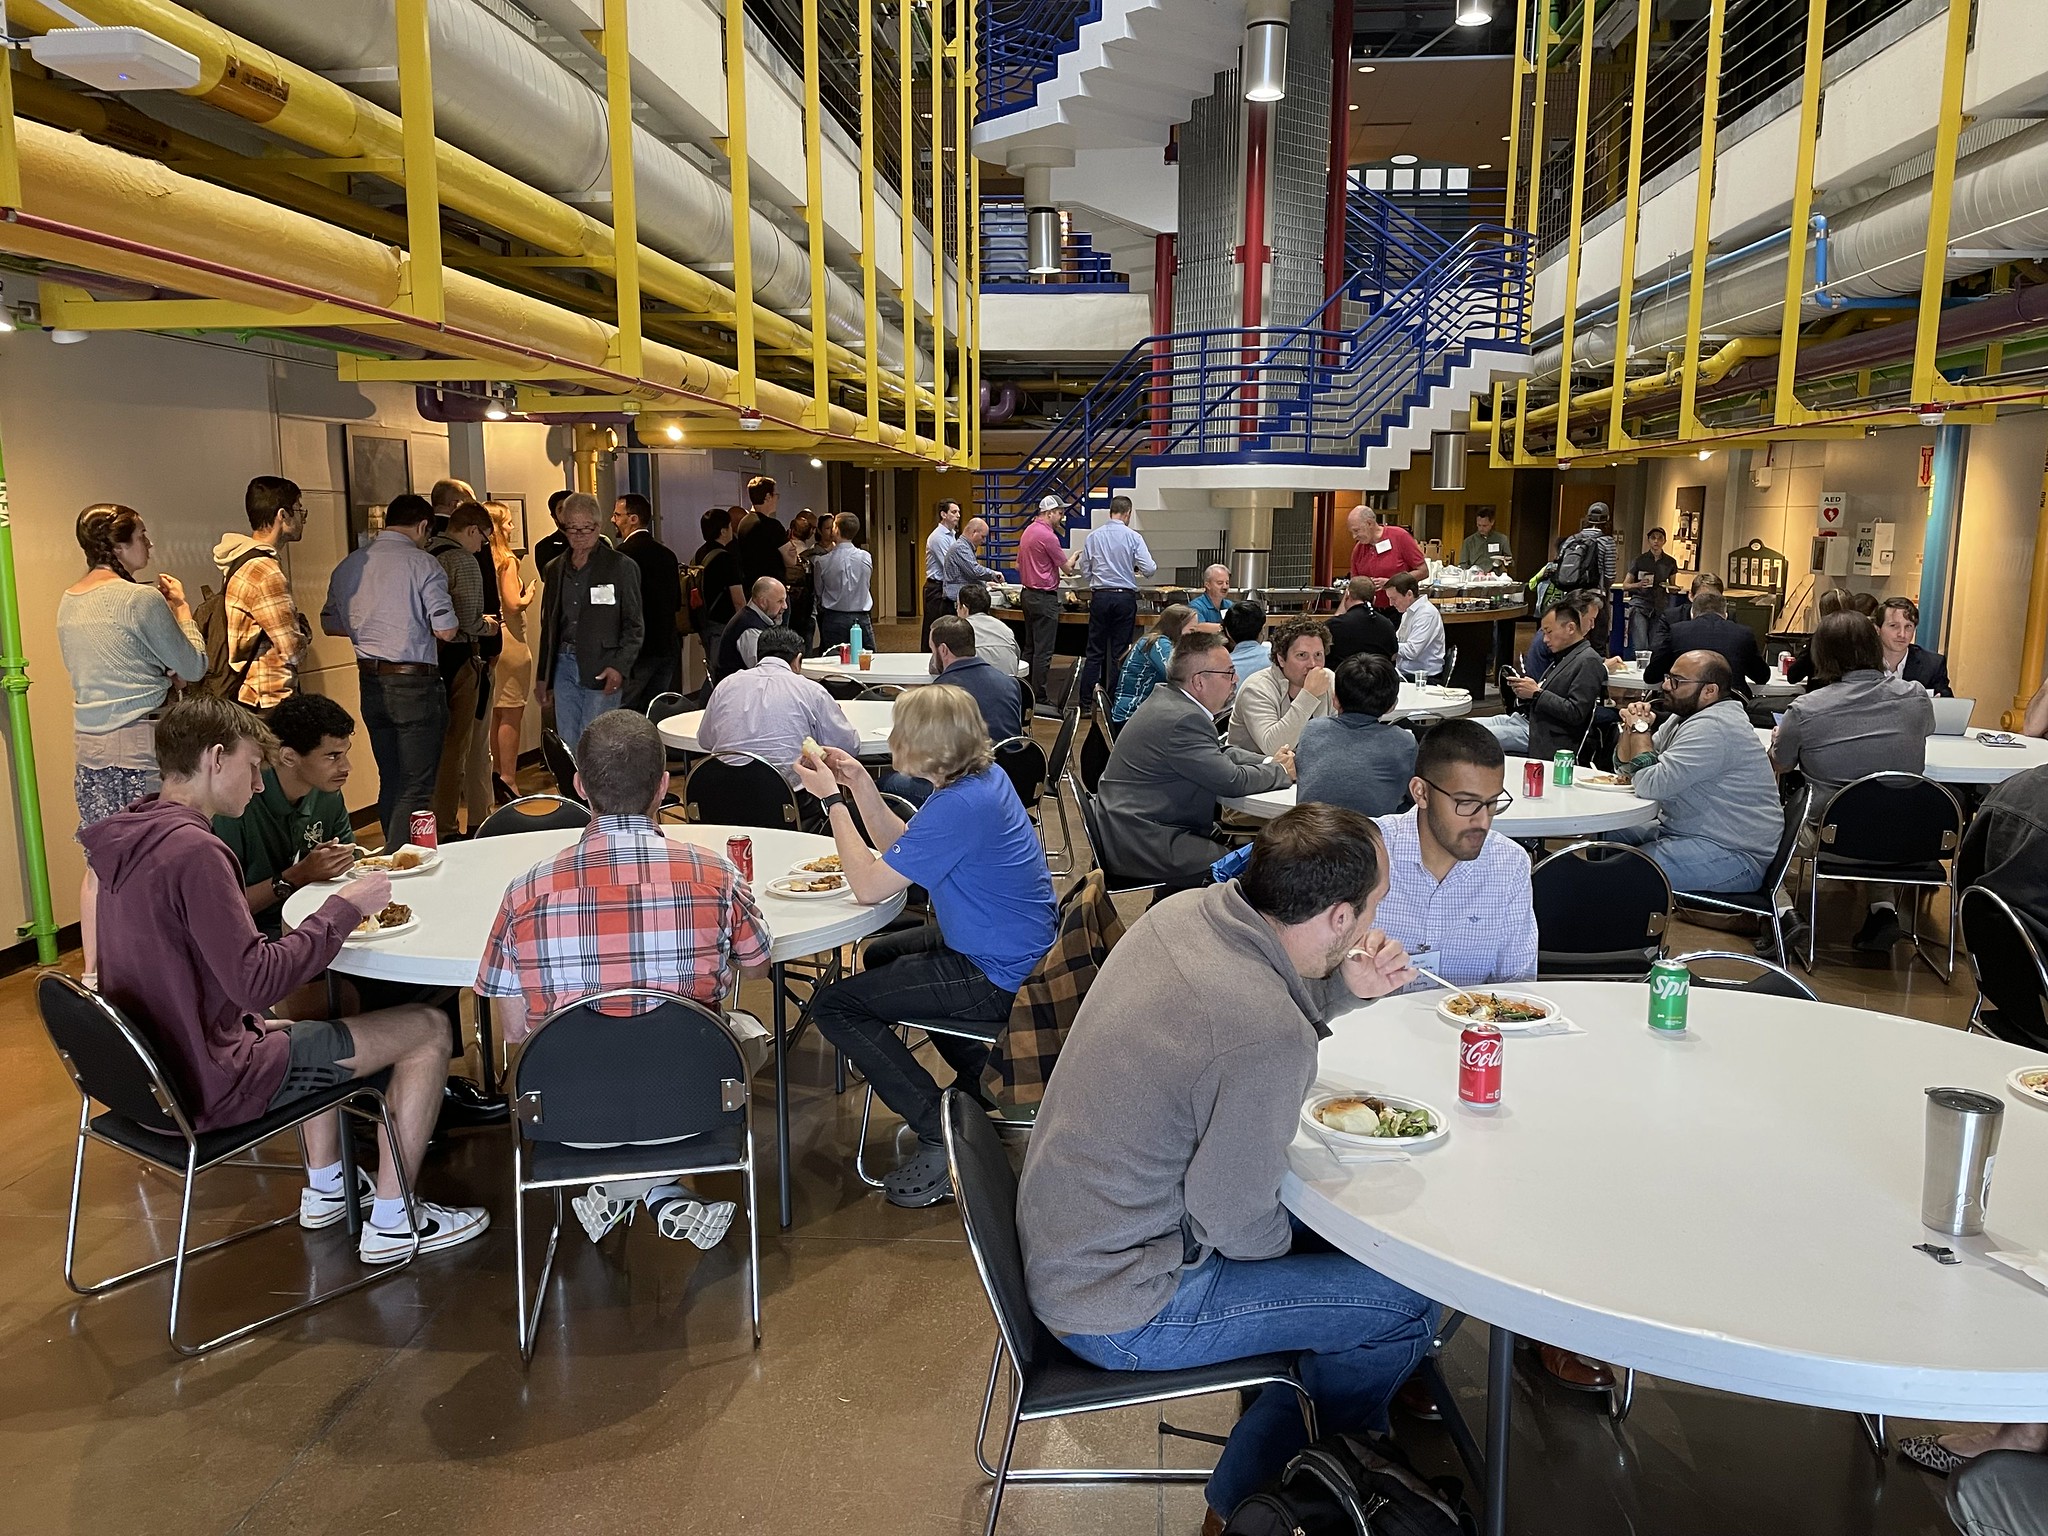 IoTfM participants enjoy lunch in the GTMI/Callaway Research building atrium.